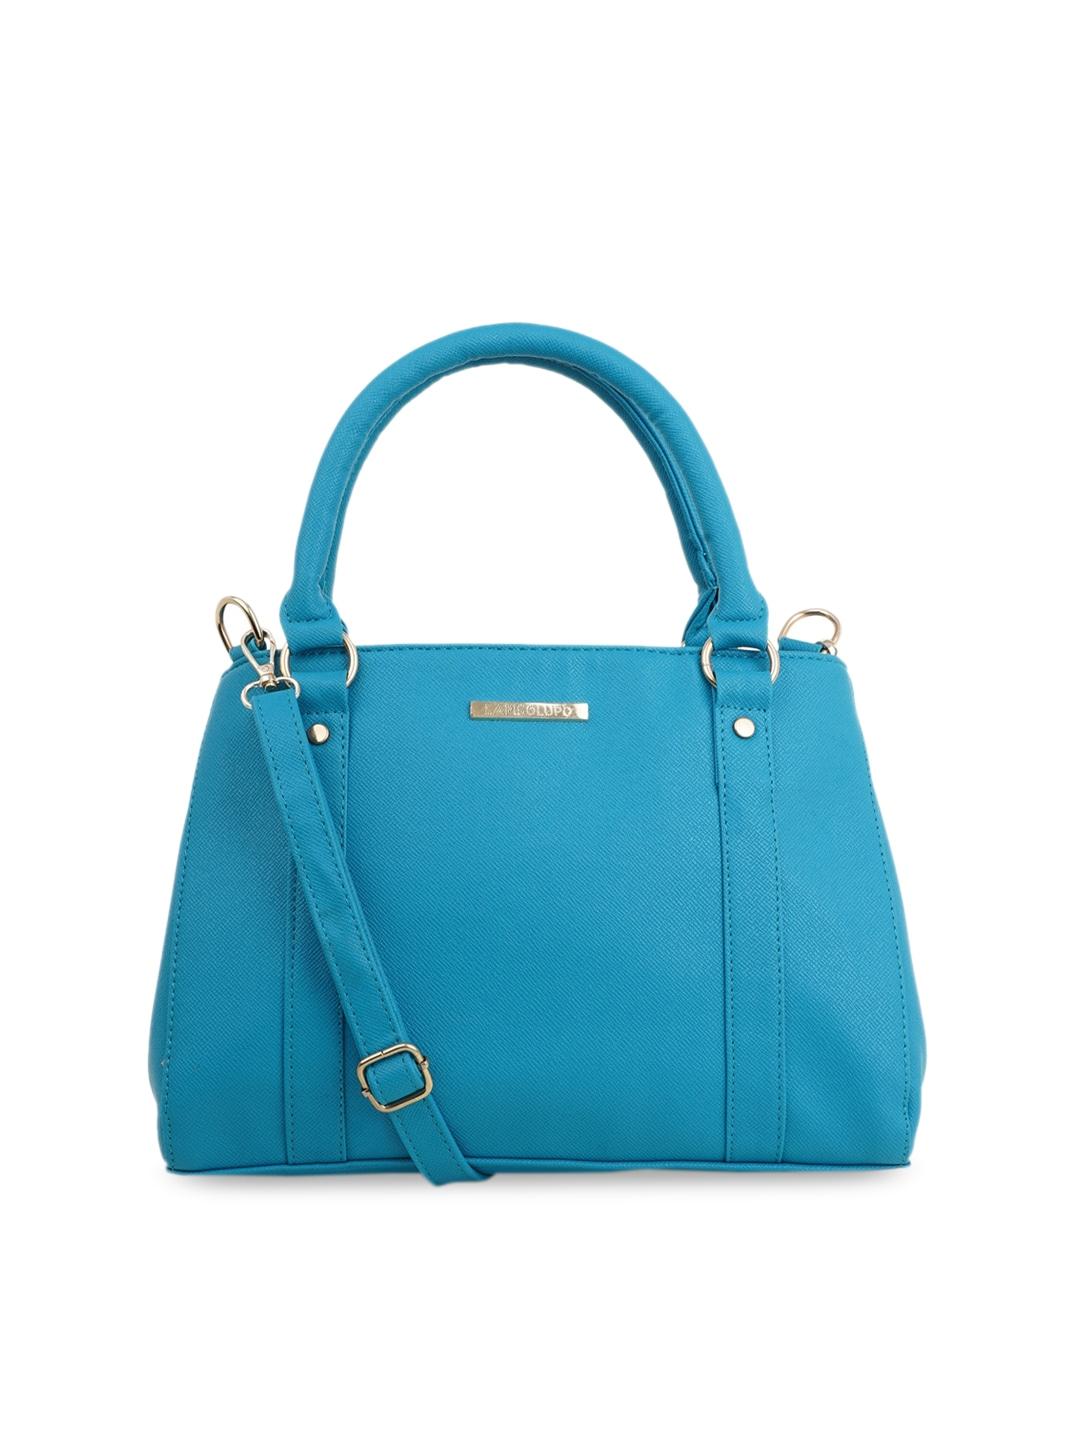 Lapis O Lupo Turquoise Blue Structured Handheld Bag